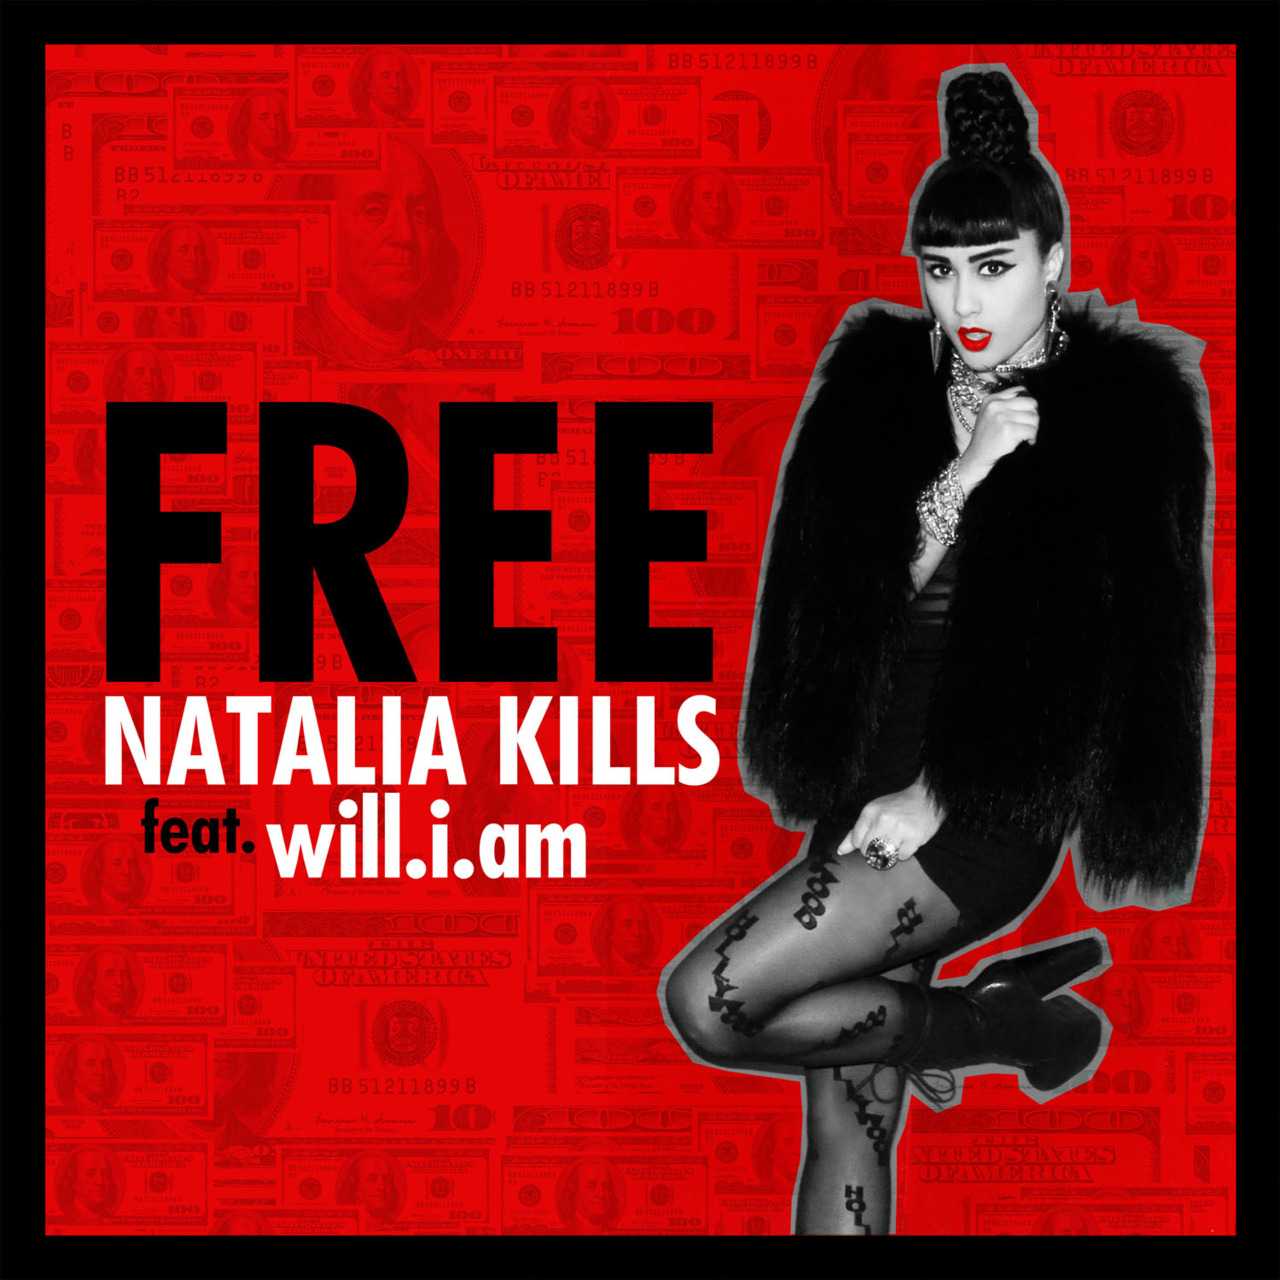 http://3.bp.blogspot.com/-b-I5wo39EMo/ThmbQlIeyvI/AAAAAAAAANY/poGPC23ypVU/s1600/Natalia+Kills+%2528feat.+will.i.am%2529+-+Free+%2528Official+Single+Cover%2529.jpg